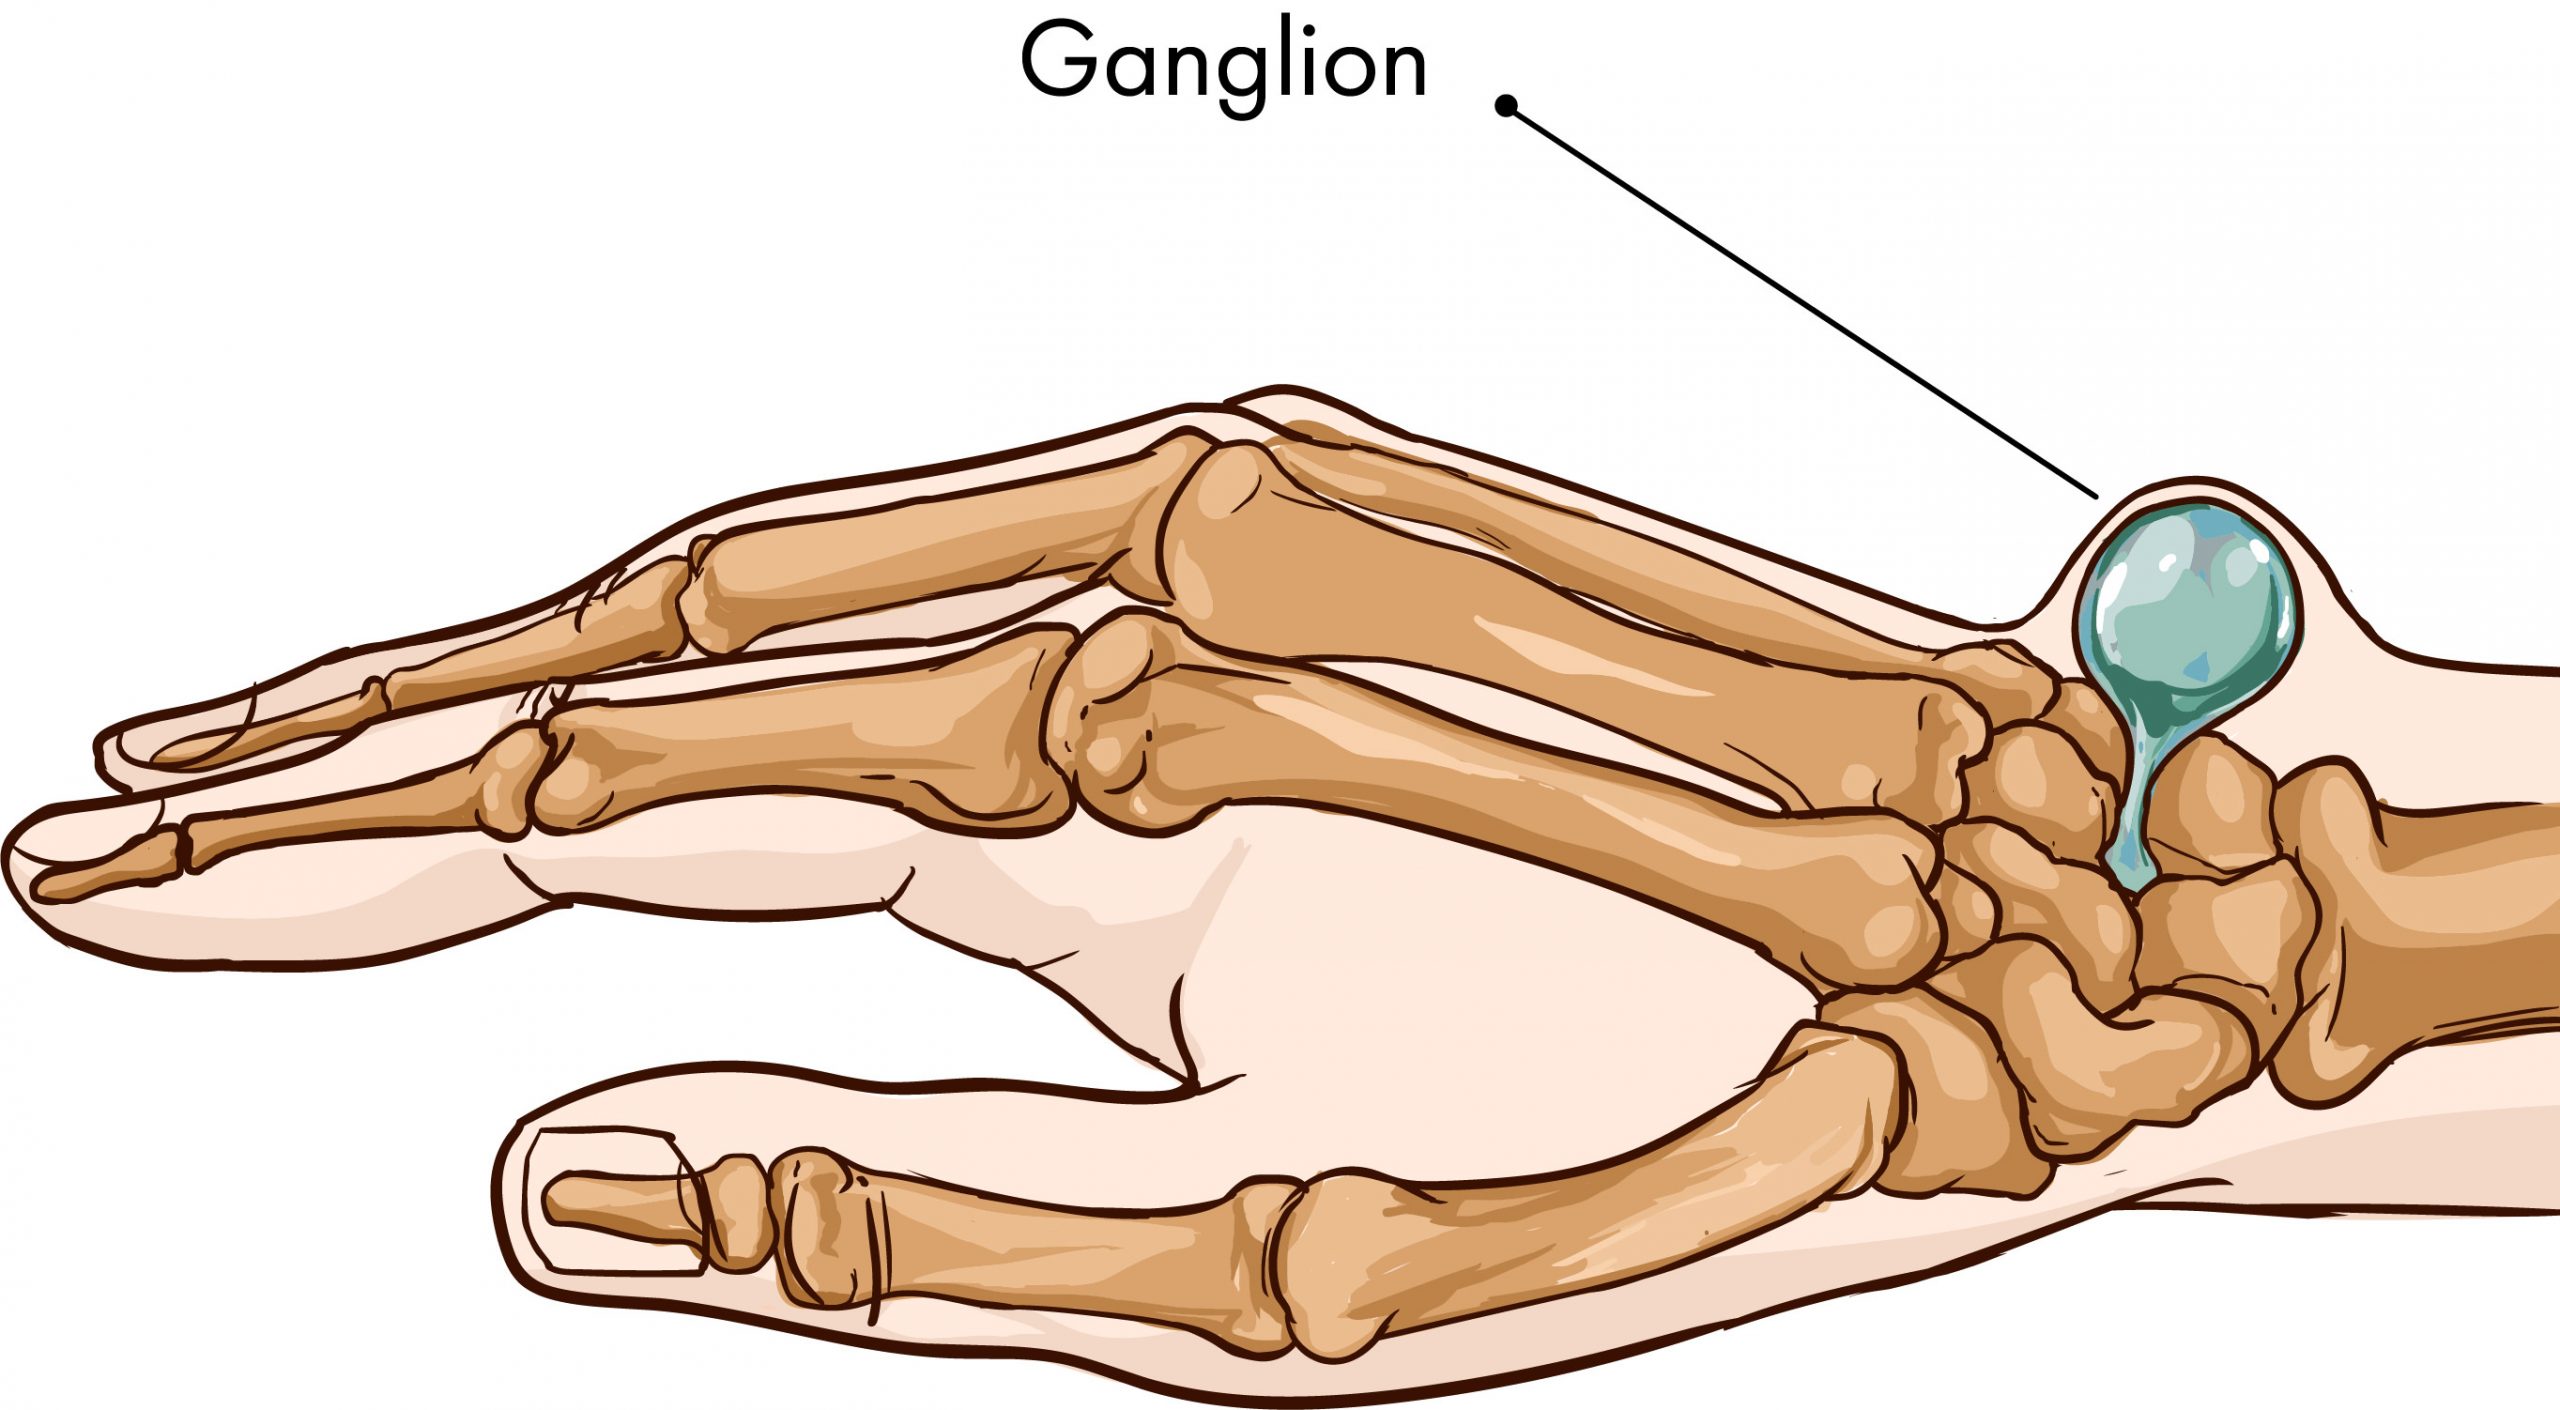 Ганглион мкб. Гигрома лучезапястного сустава мкб. Гигрома лучезапястного сустава анатомия. Синовиальная киста (гигрома).